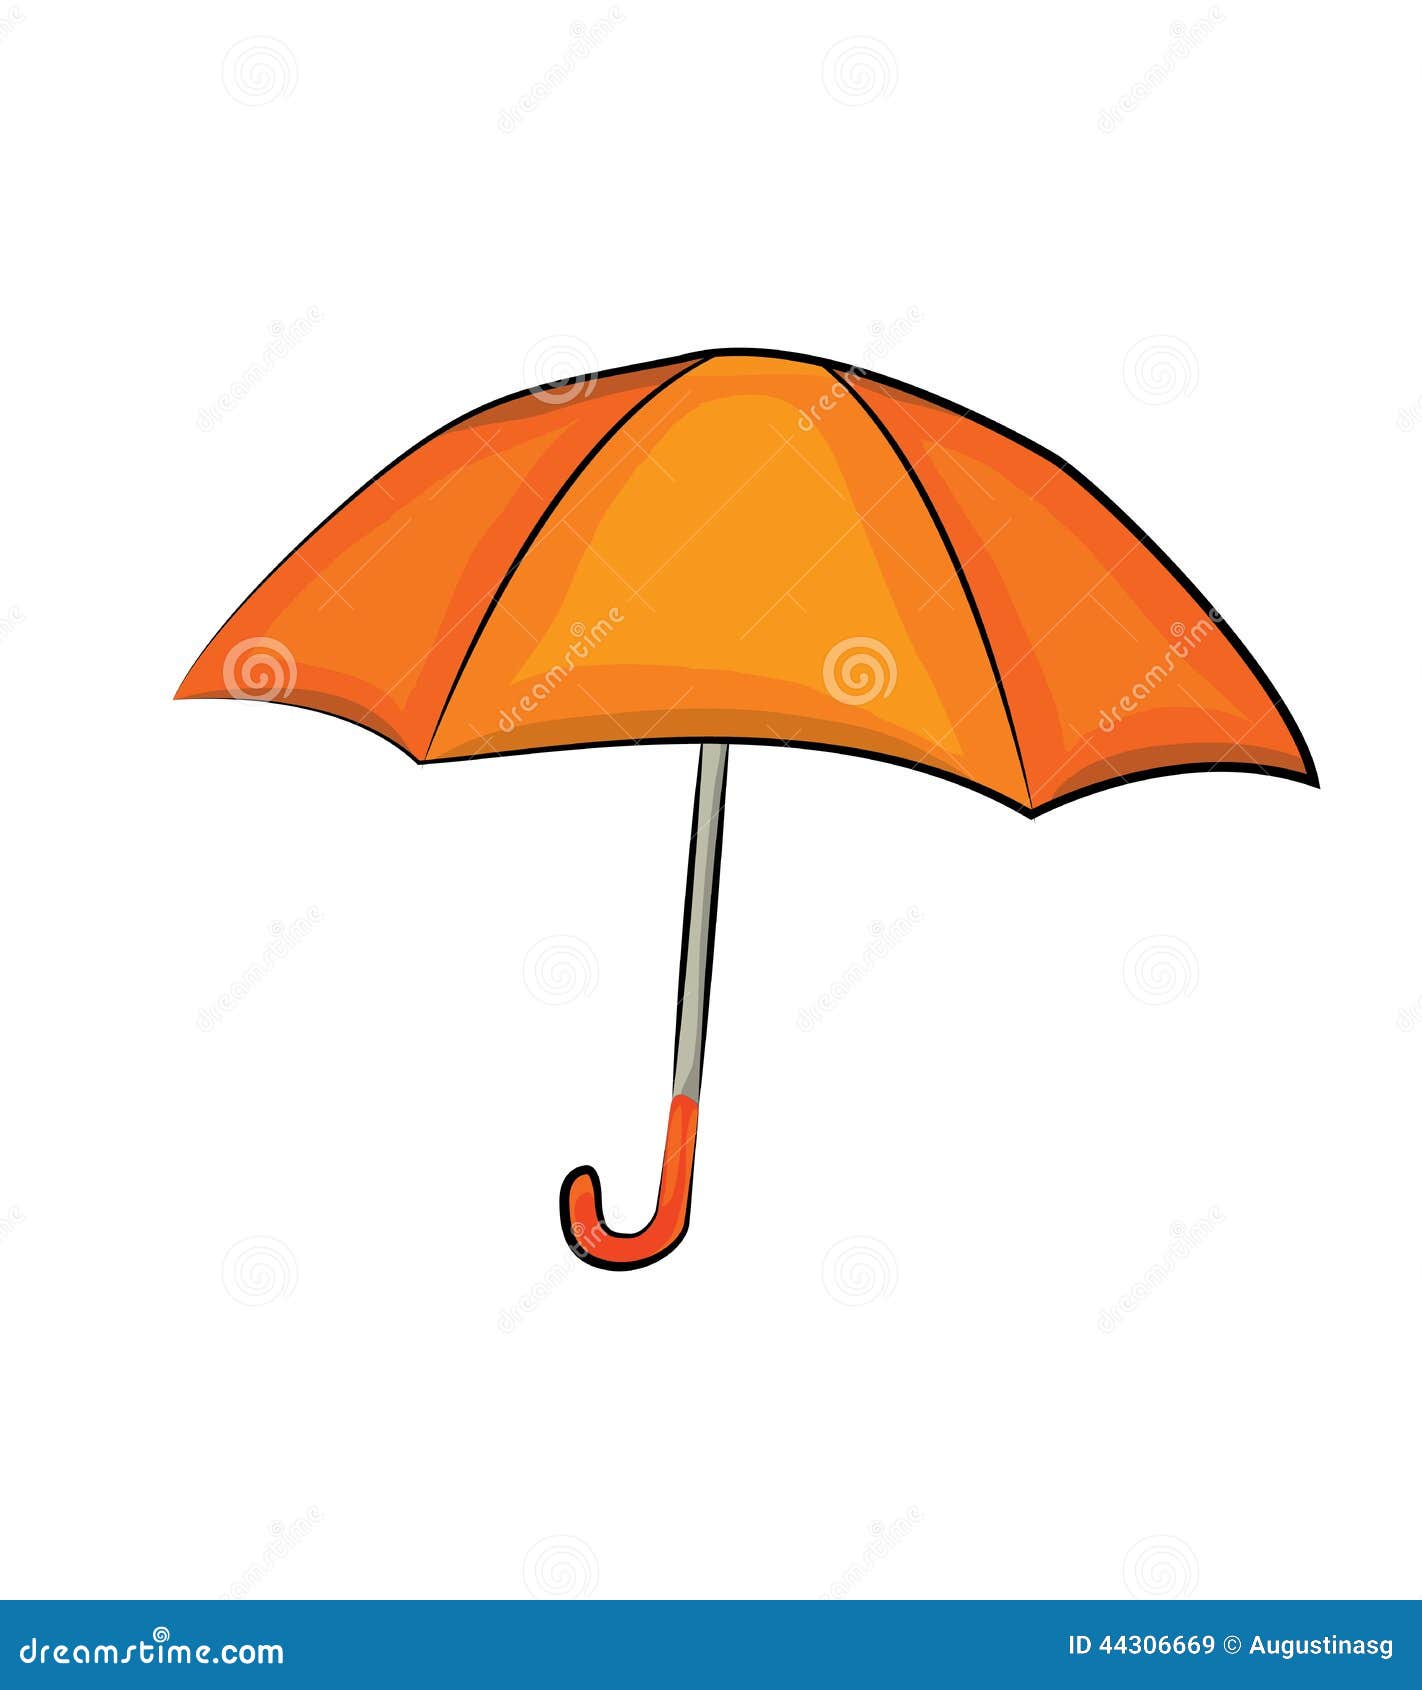 Umbrella cartoon stock illustration. Illustration of umbrella - 44306669